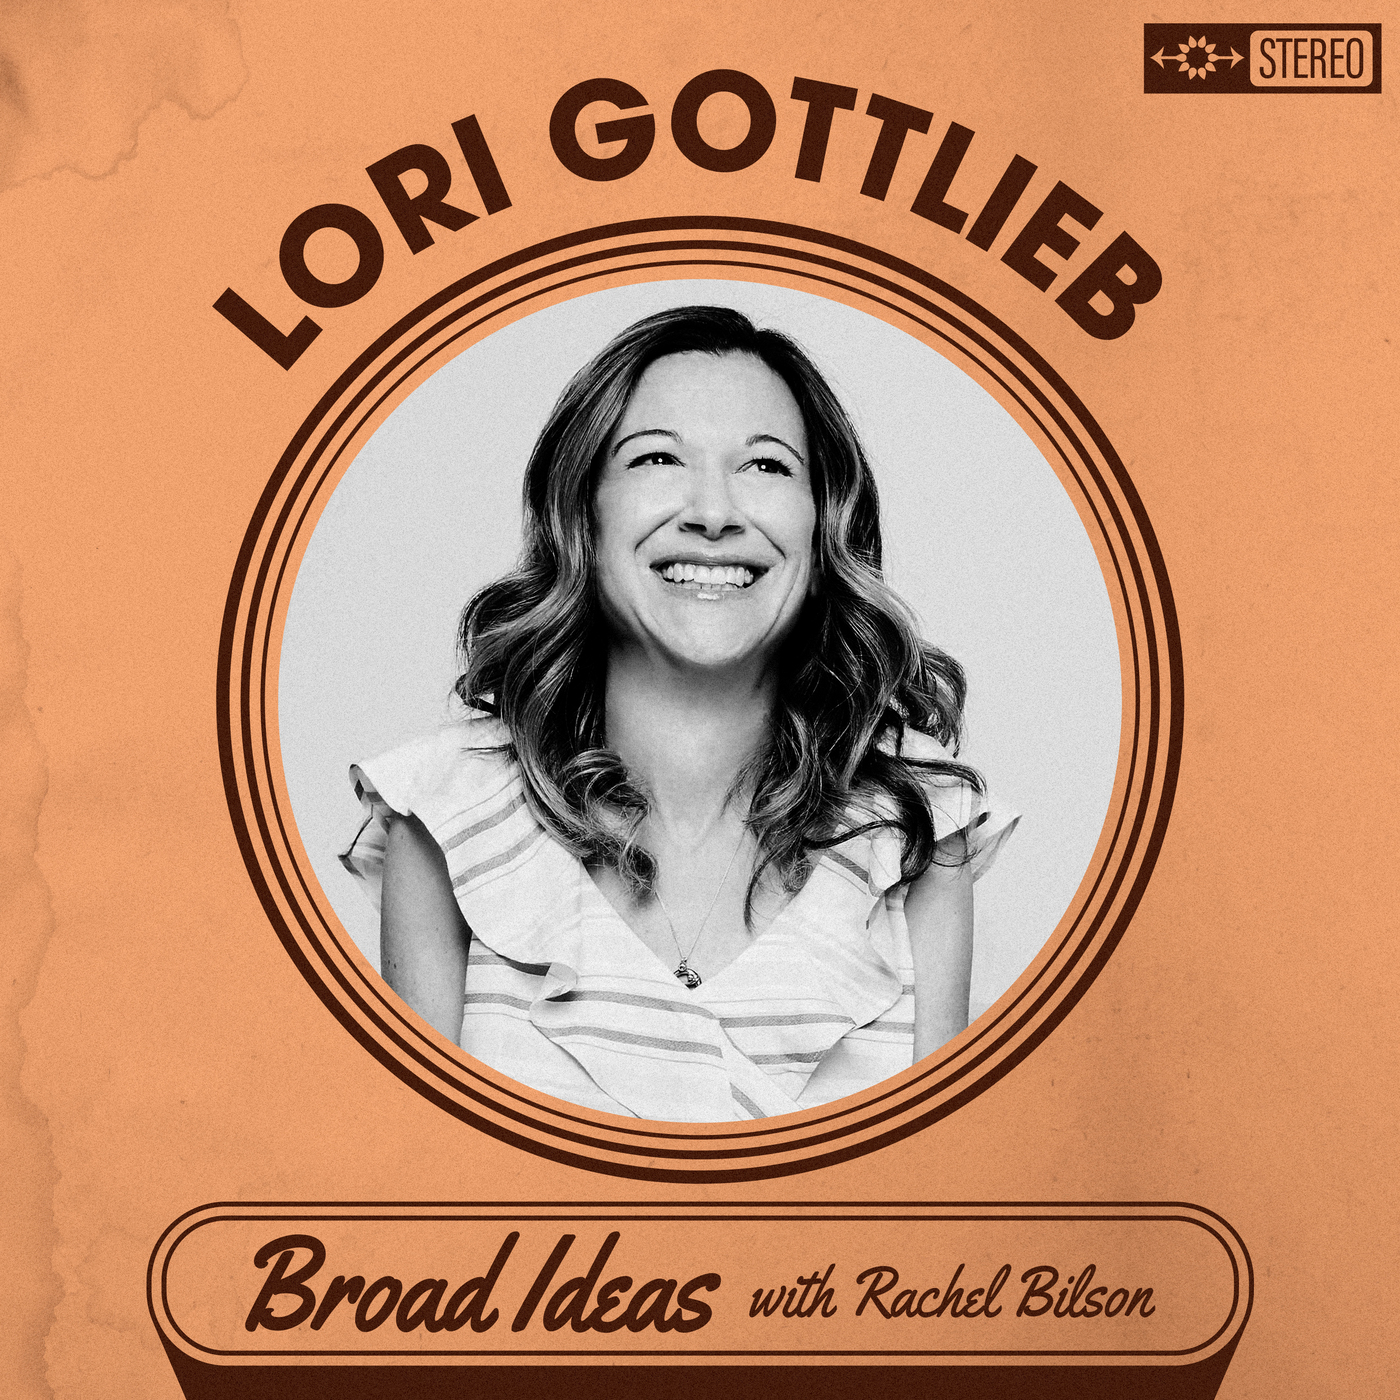 Lori Gottlieb on Idiot Compassion, Boundaries, and Self-Criticism